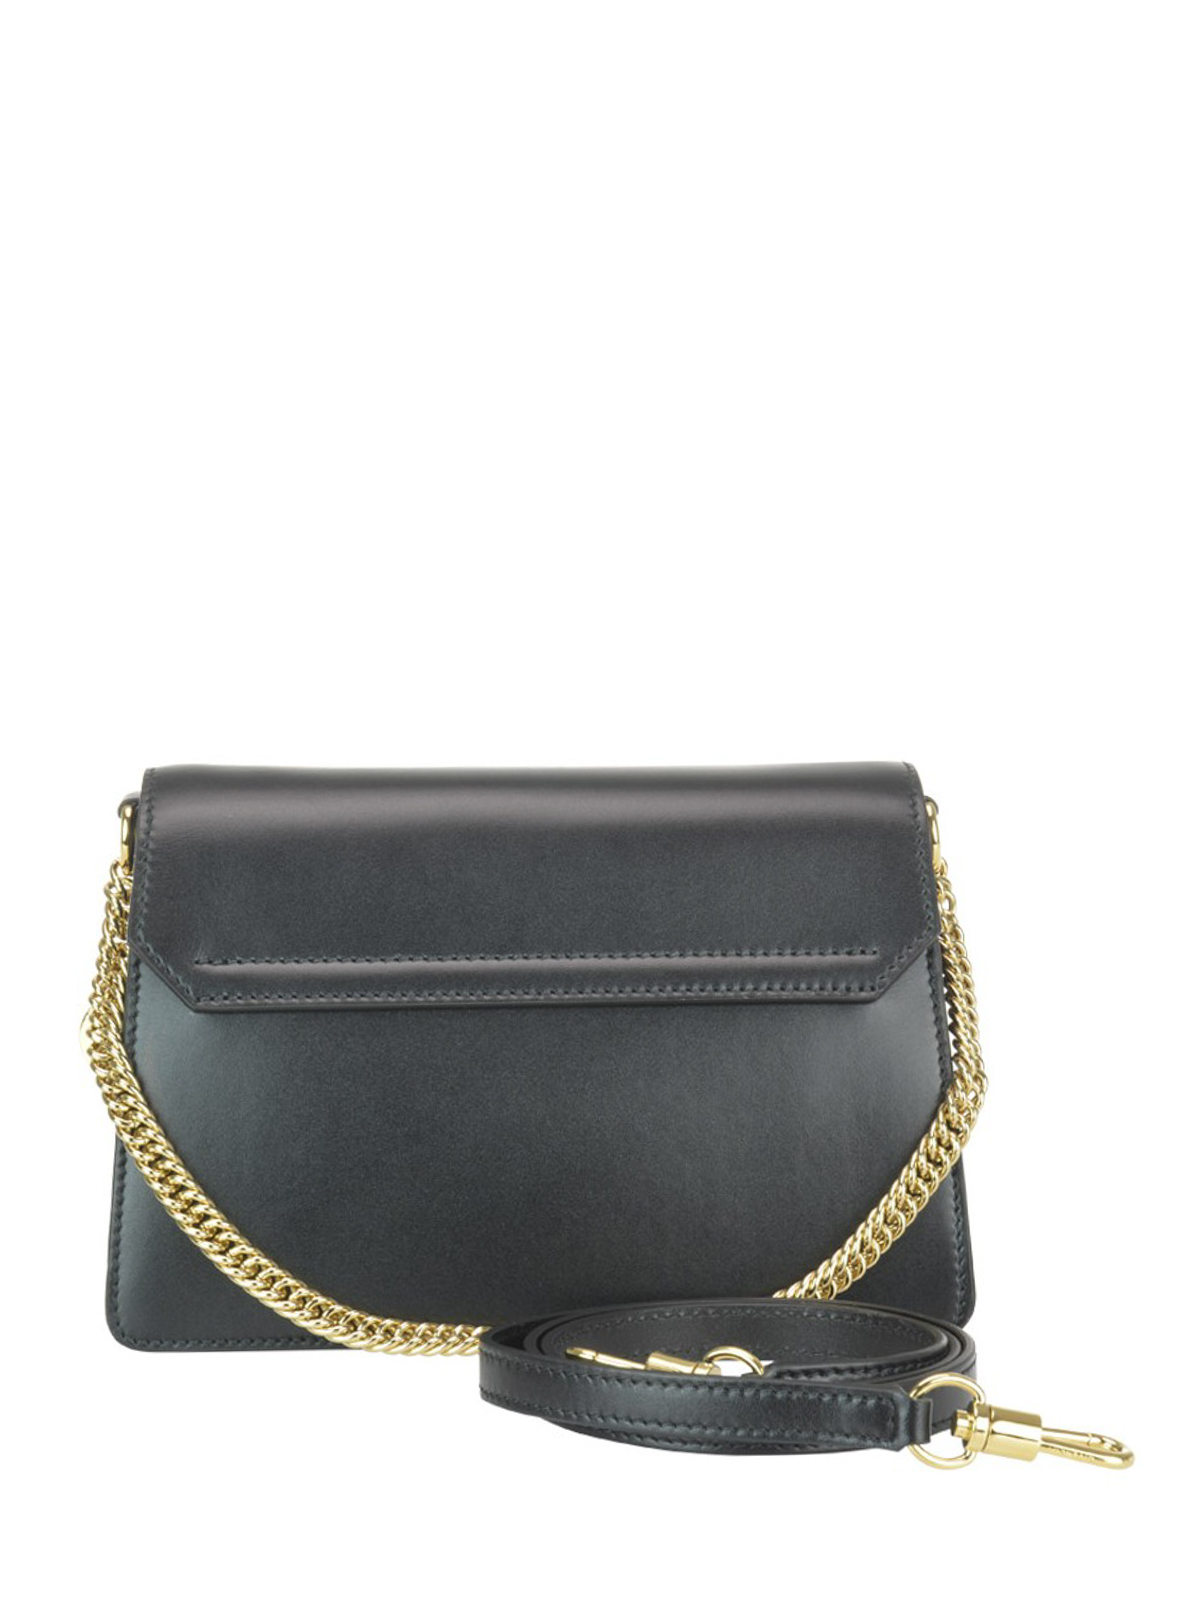 Cross body bags Givenchy - GV3 black leather small bag - BB501CB0LT001